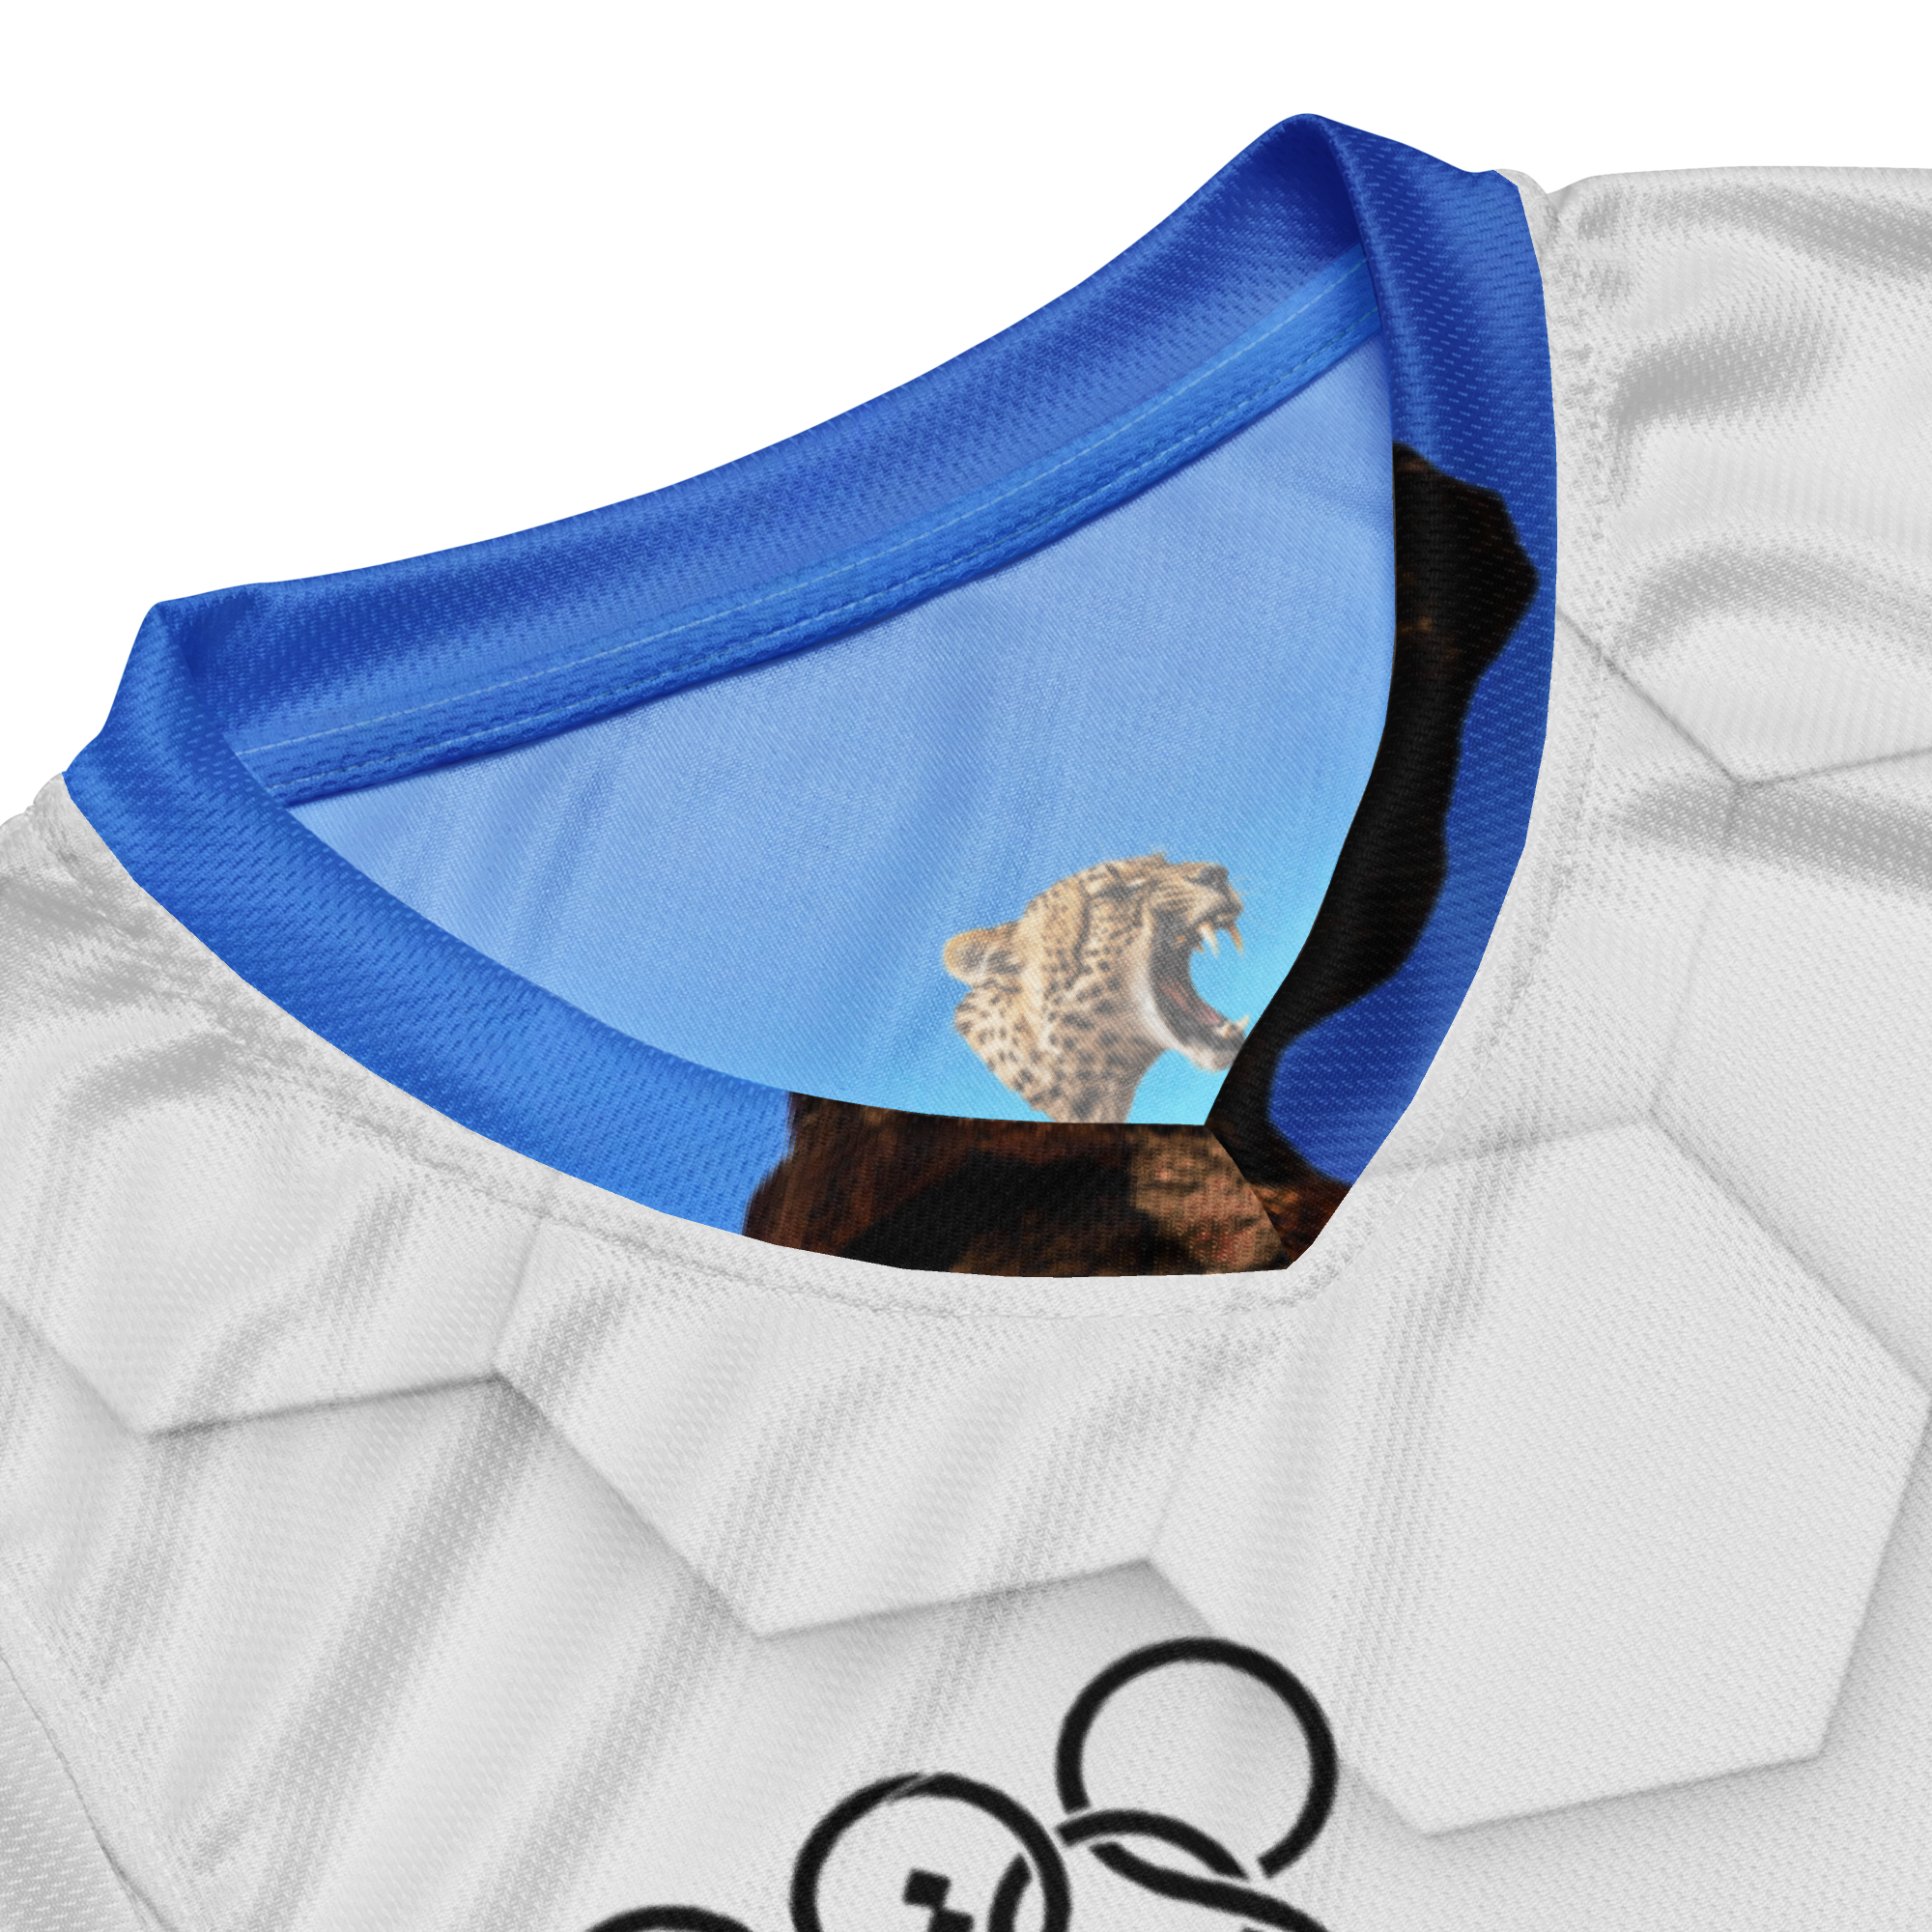 Pirouzi Athletics Palestine 🇵🇸 jersey